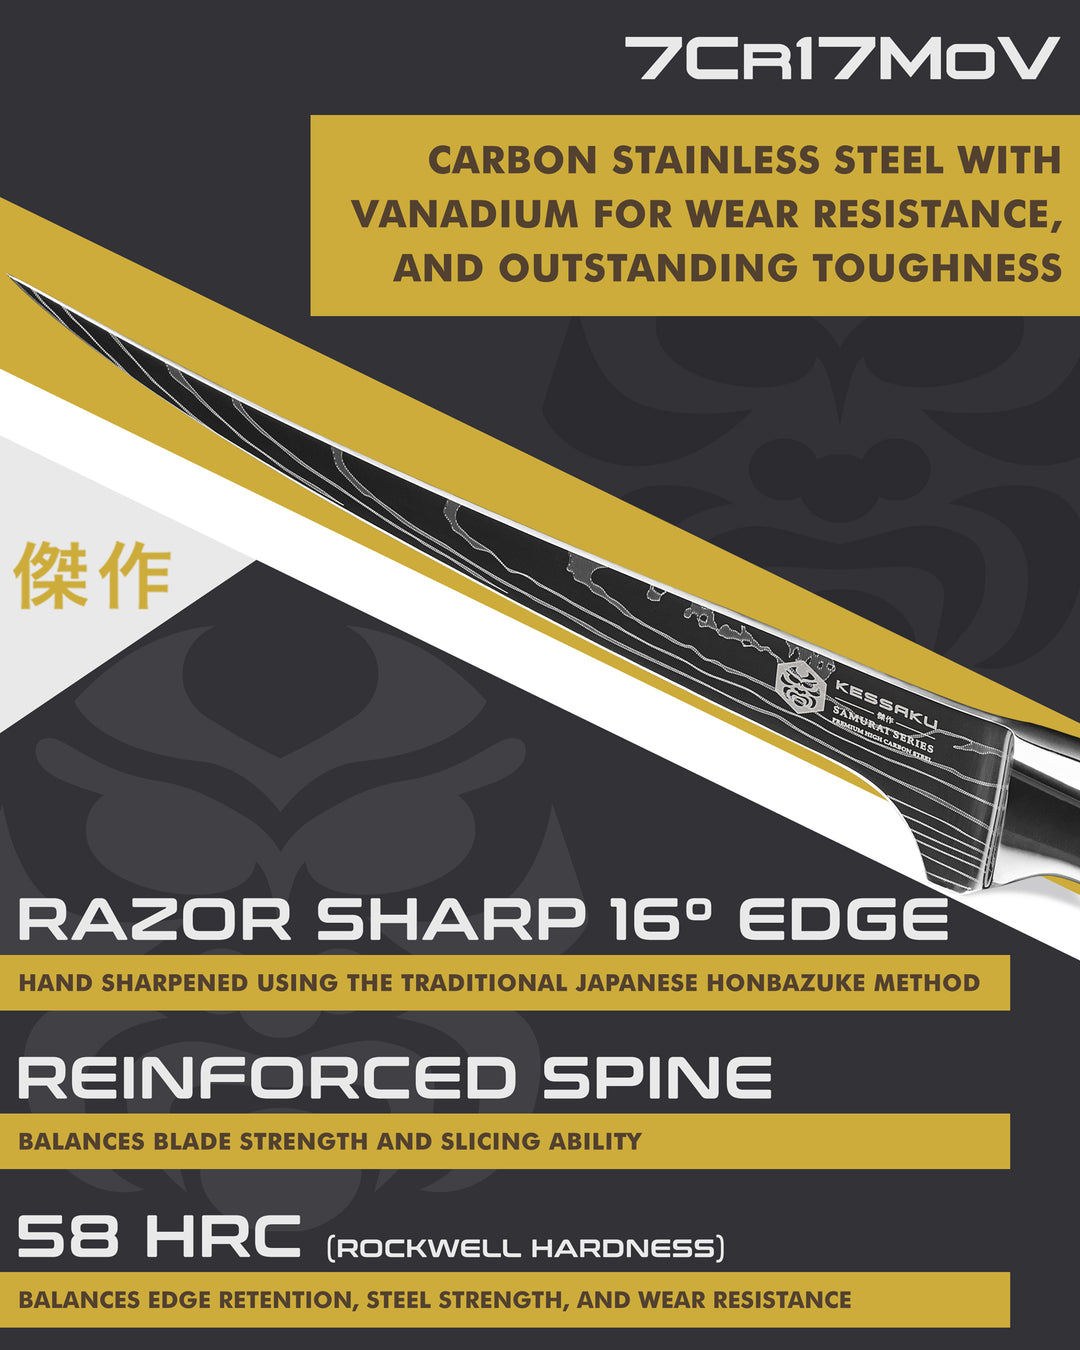 Kessaku Samurai Fillet Knife blade features: 7Cr17MoV steel, 58 HRC, 16 degree edge, reinforced spine